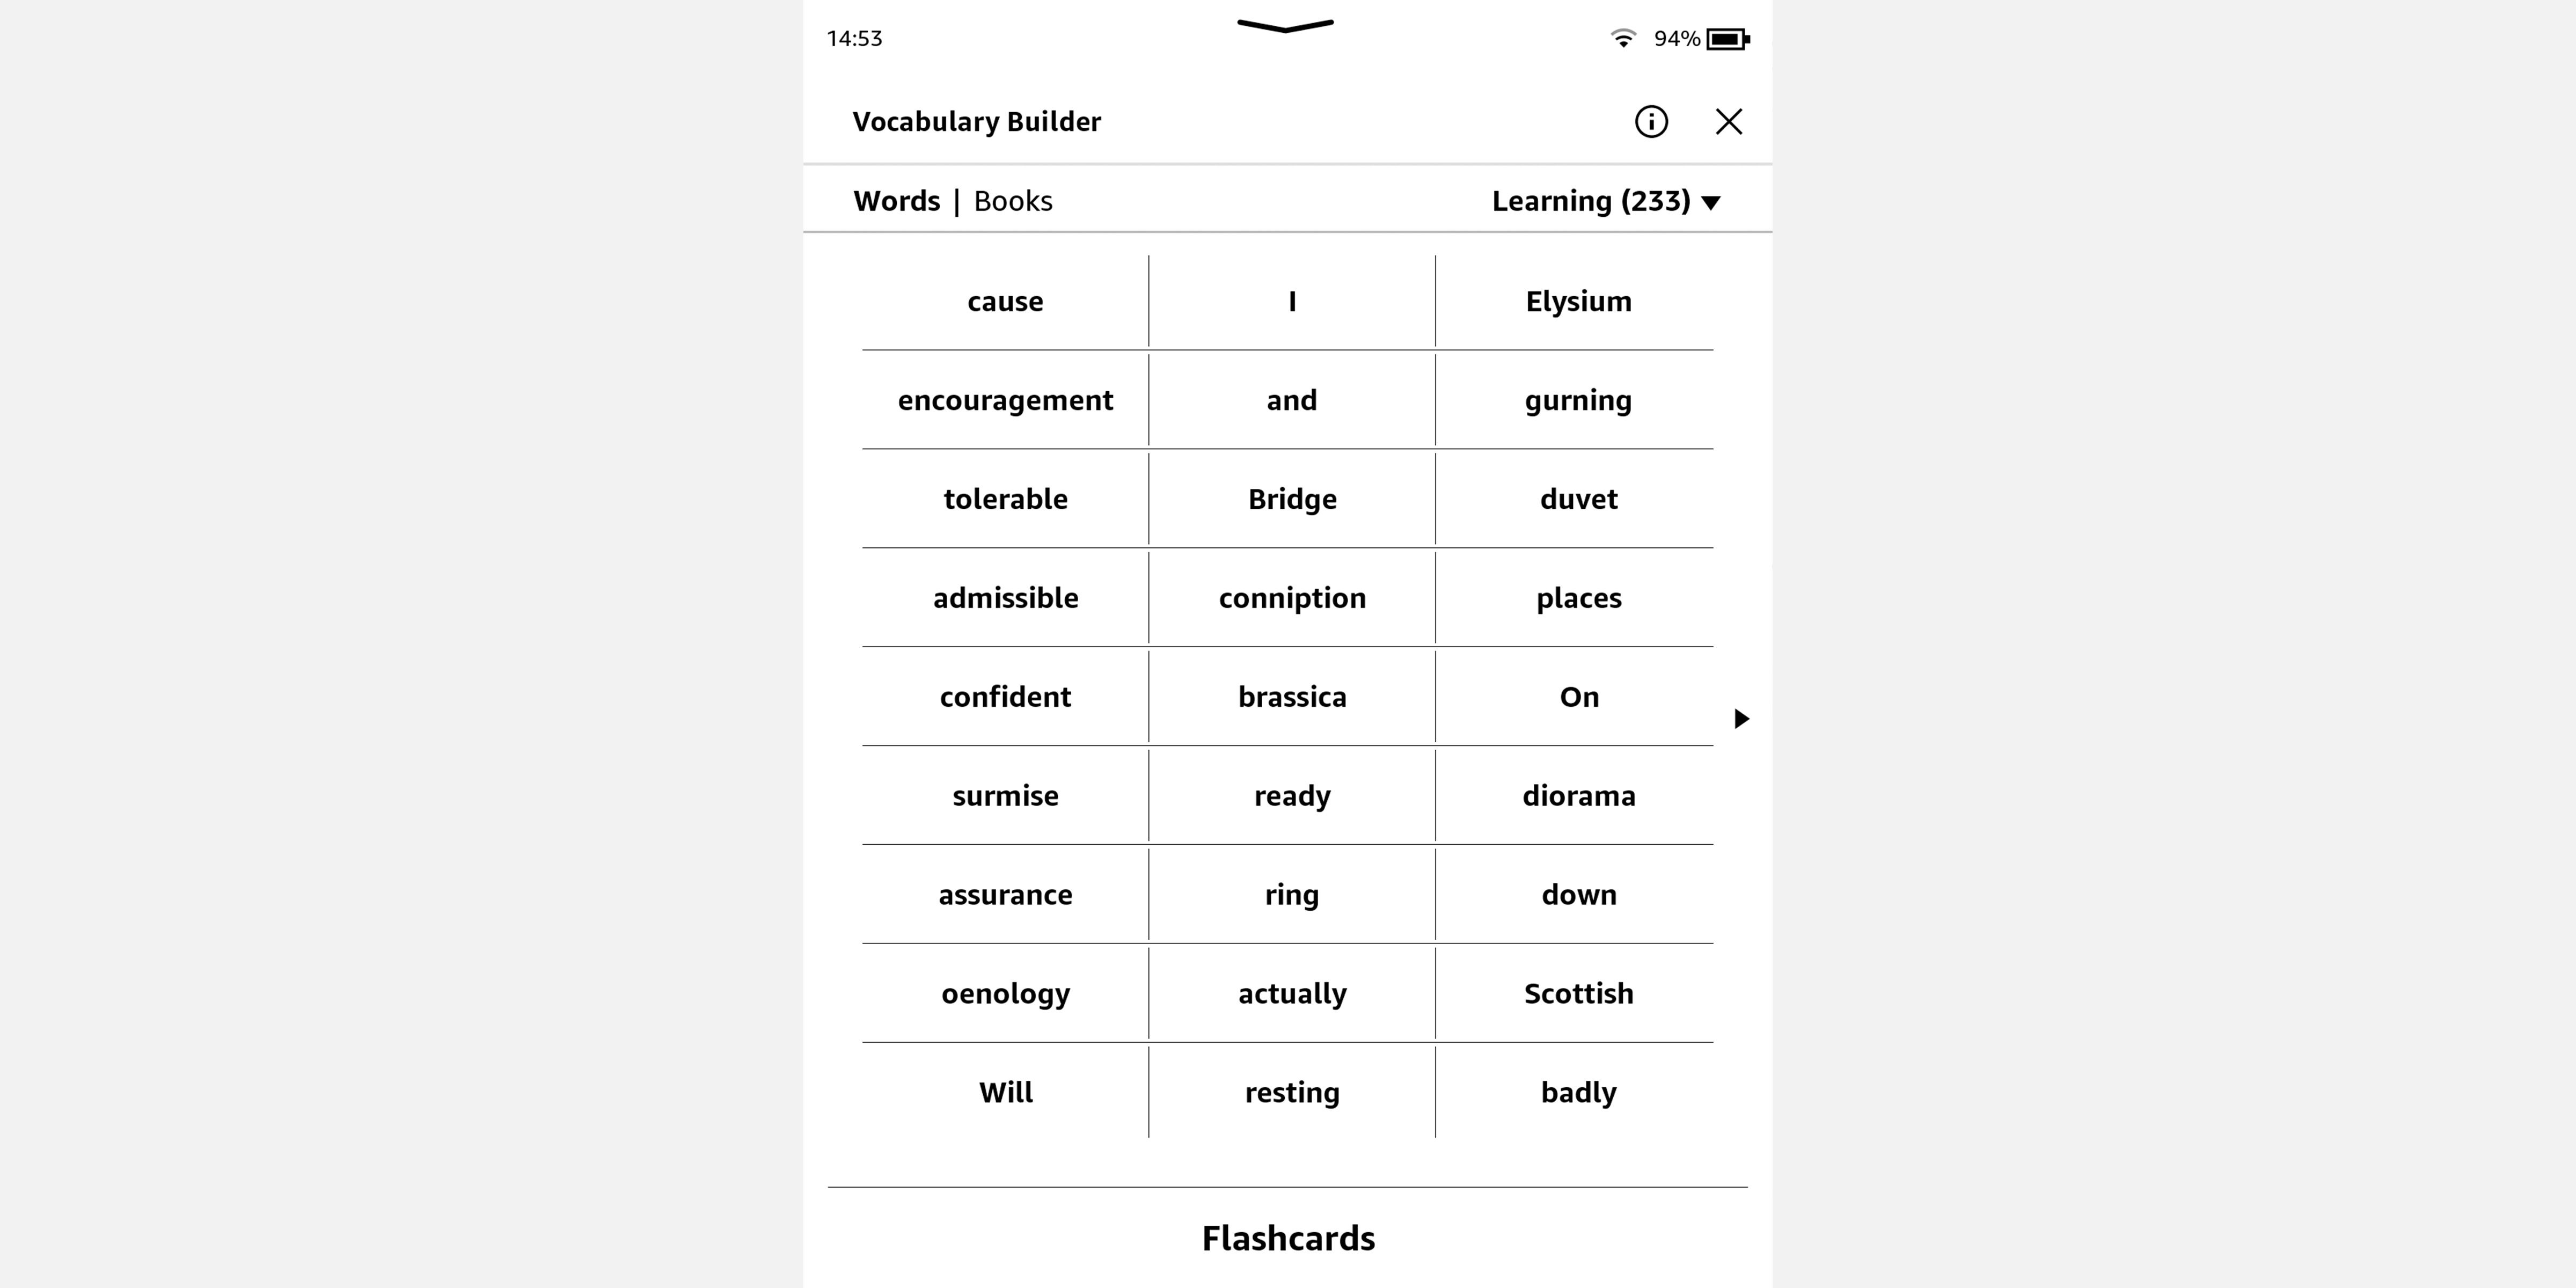 Screenshot of Amazon Kindle showing Vocabulary Builder tool